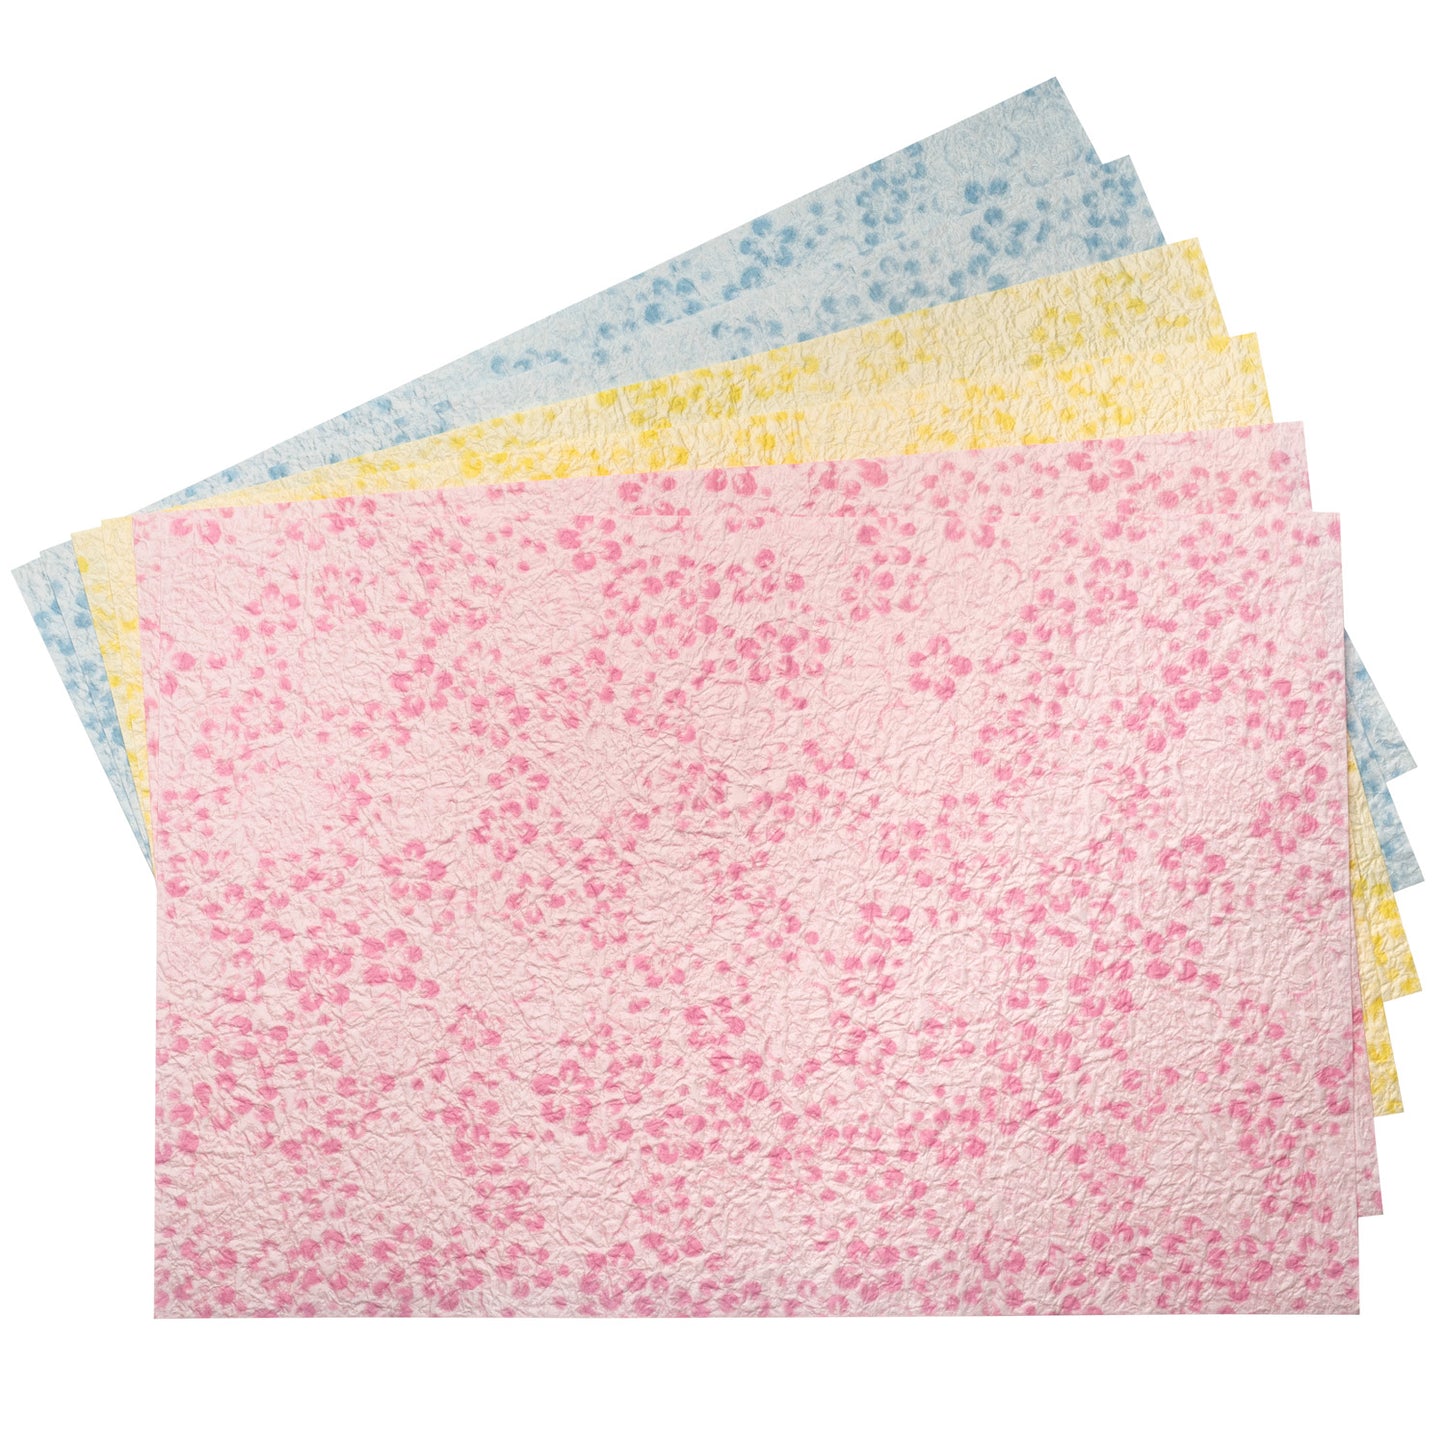 Plum Craft Sheets Pack 6 Echizen Washi Paper patterns